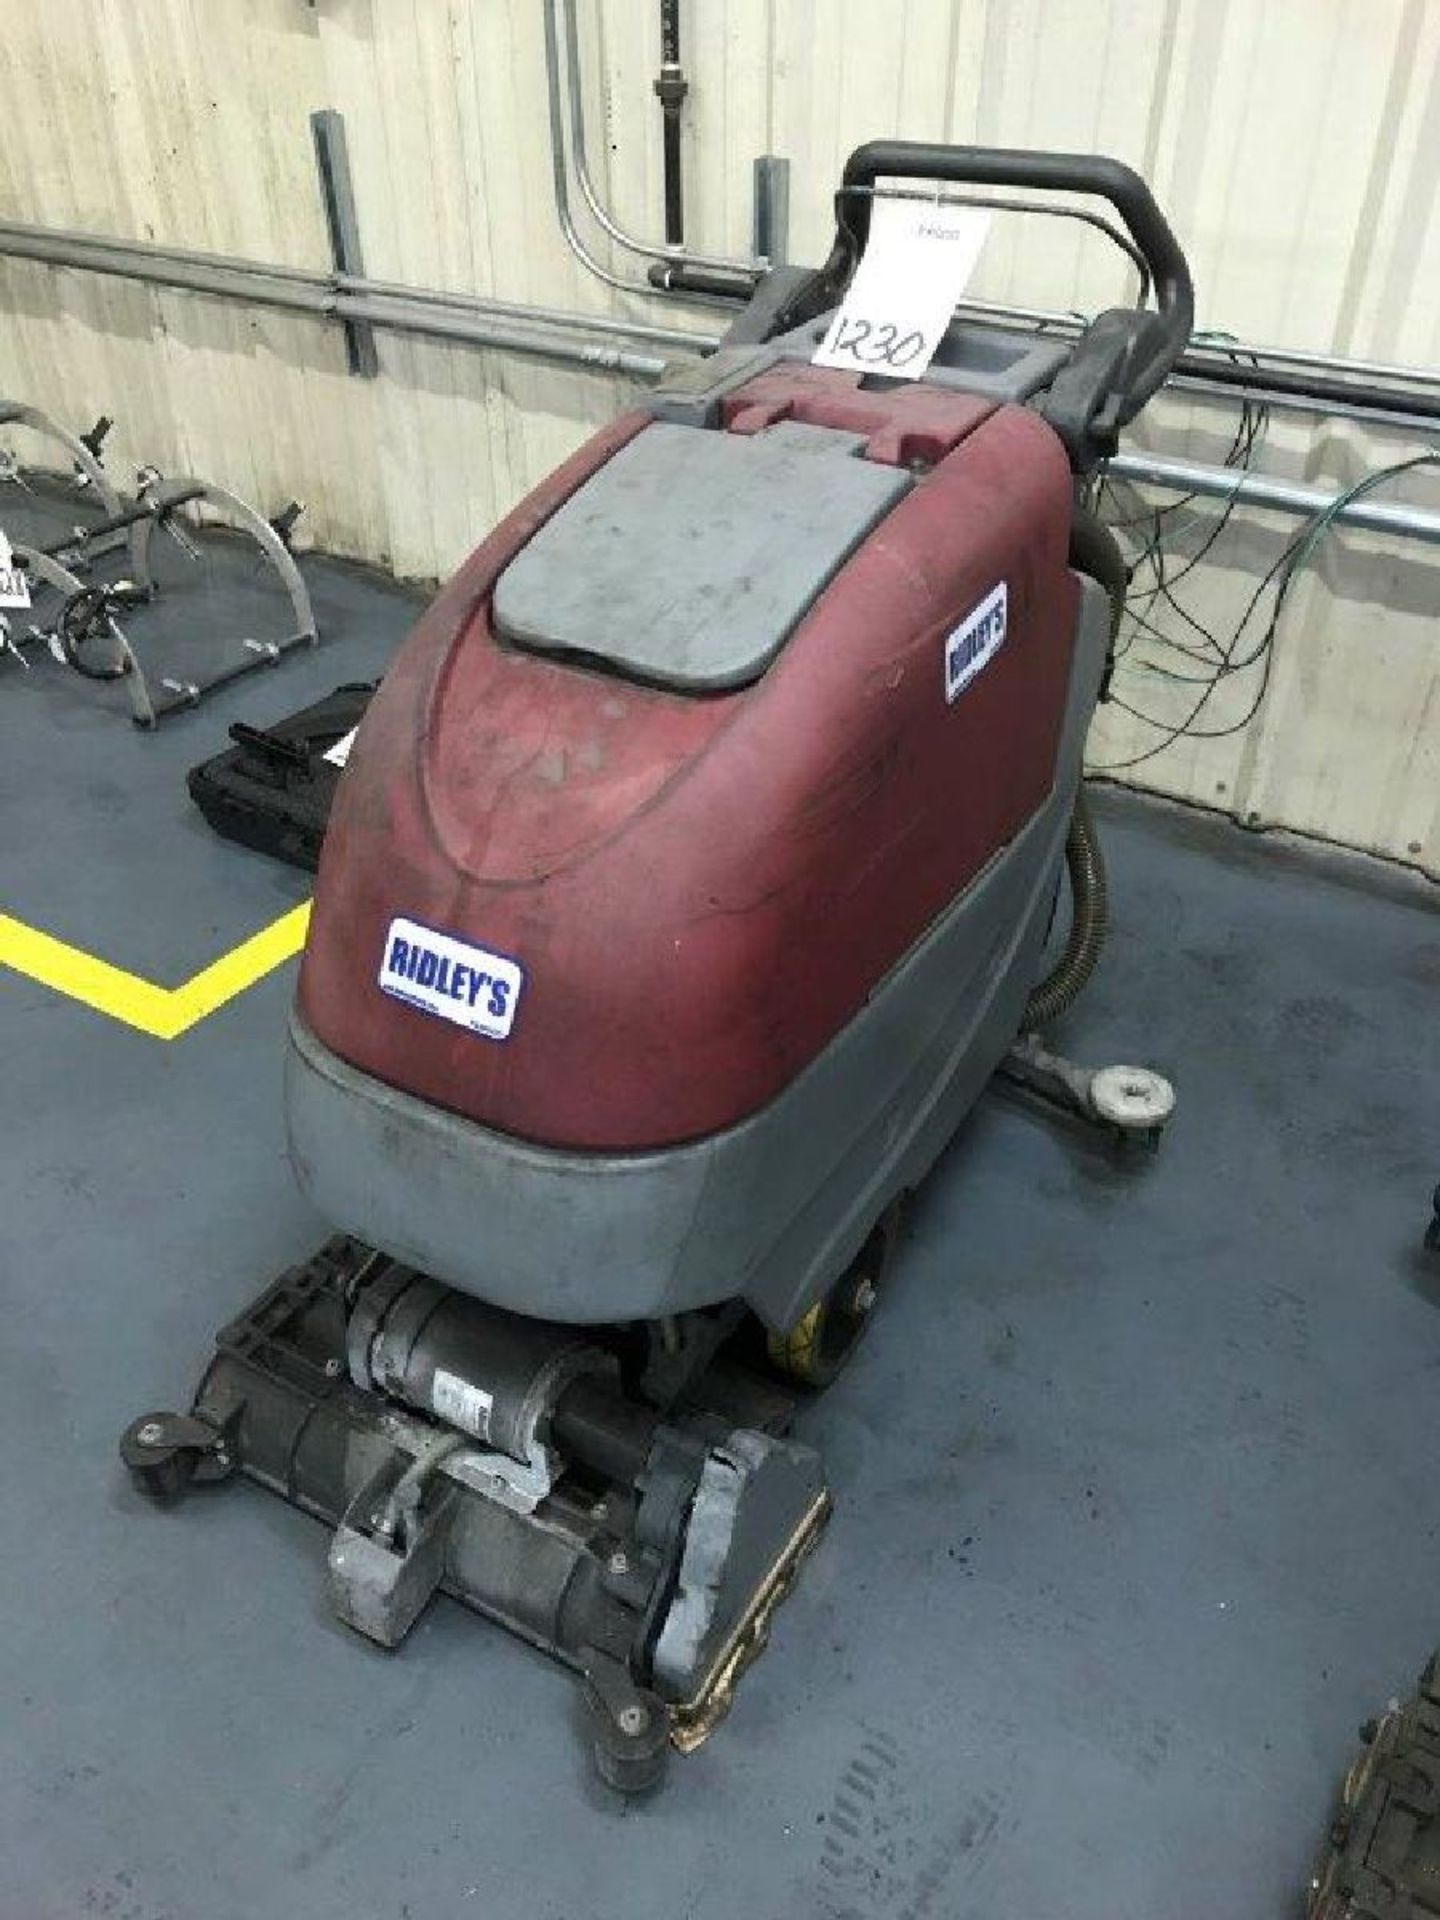 Minute Man Model E20CQP 20" Electric Walk Behind Floor Sweeper/Scrubber